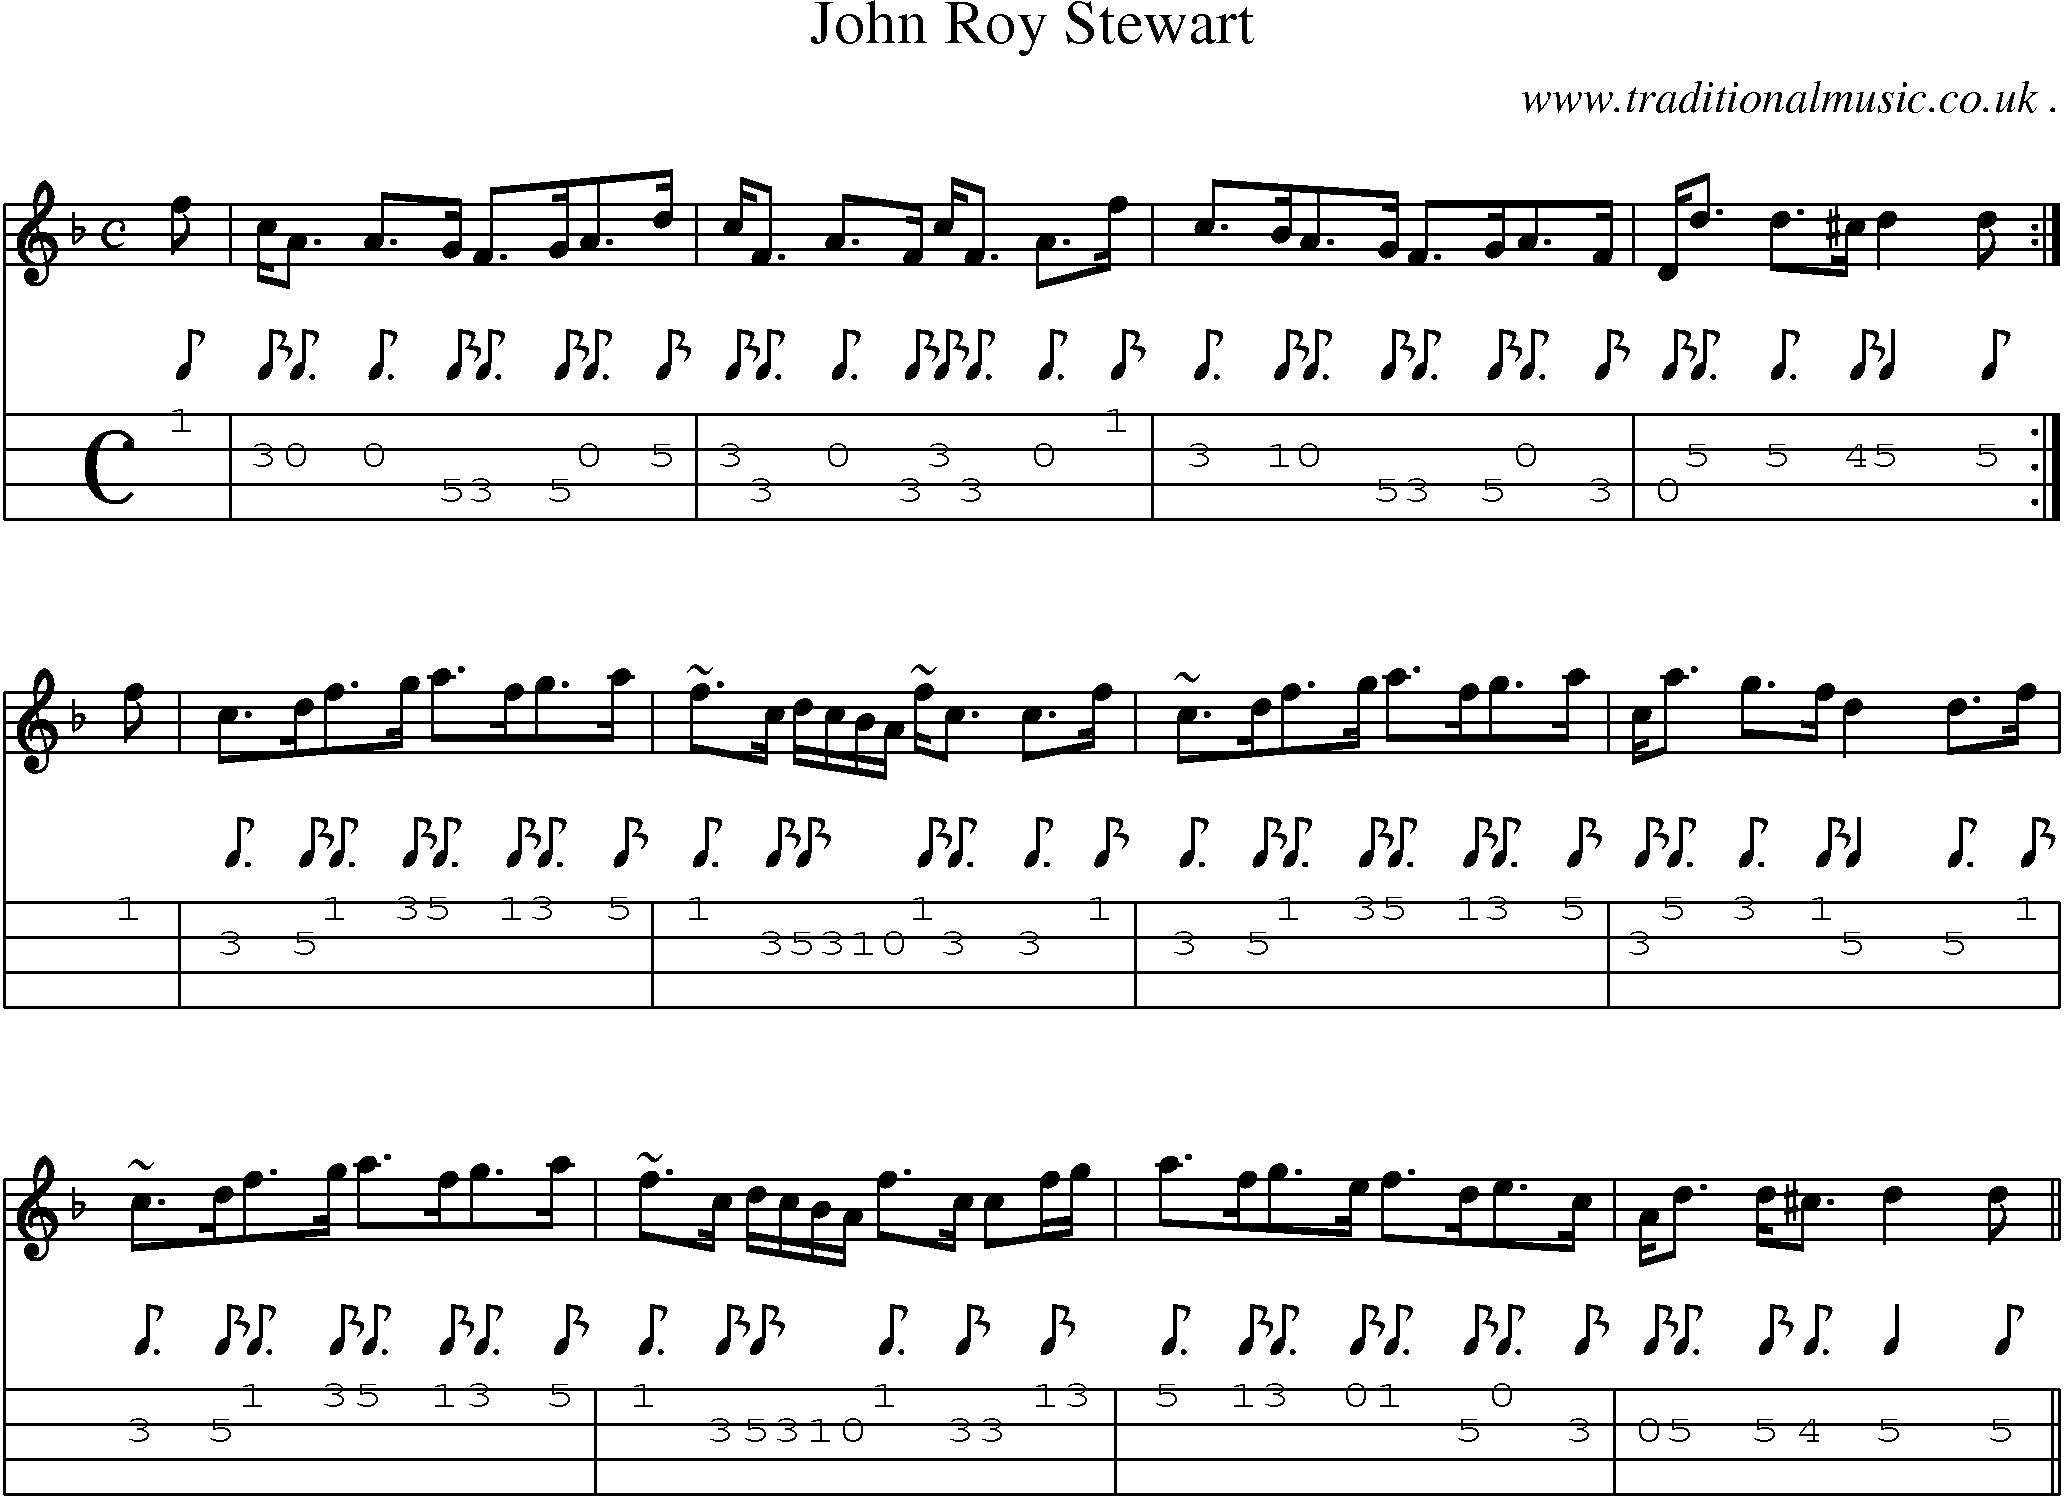 Sheet-music  score, Chords and Mandolin Tabs for John Roy Stewart